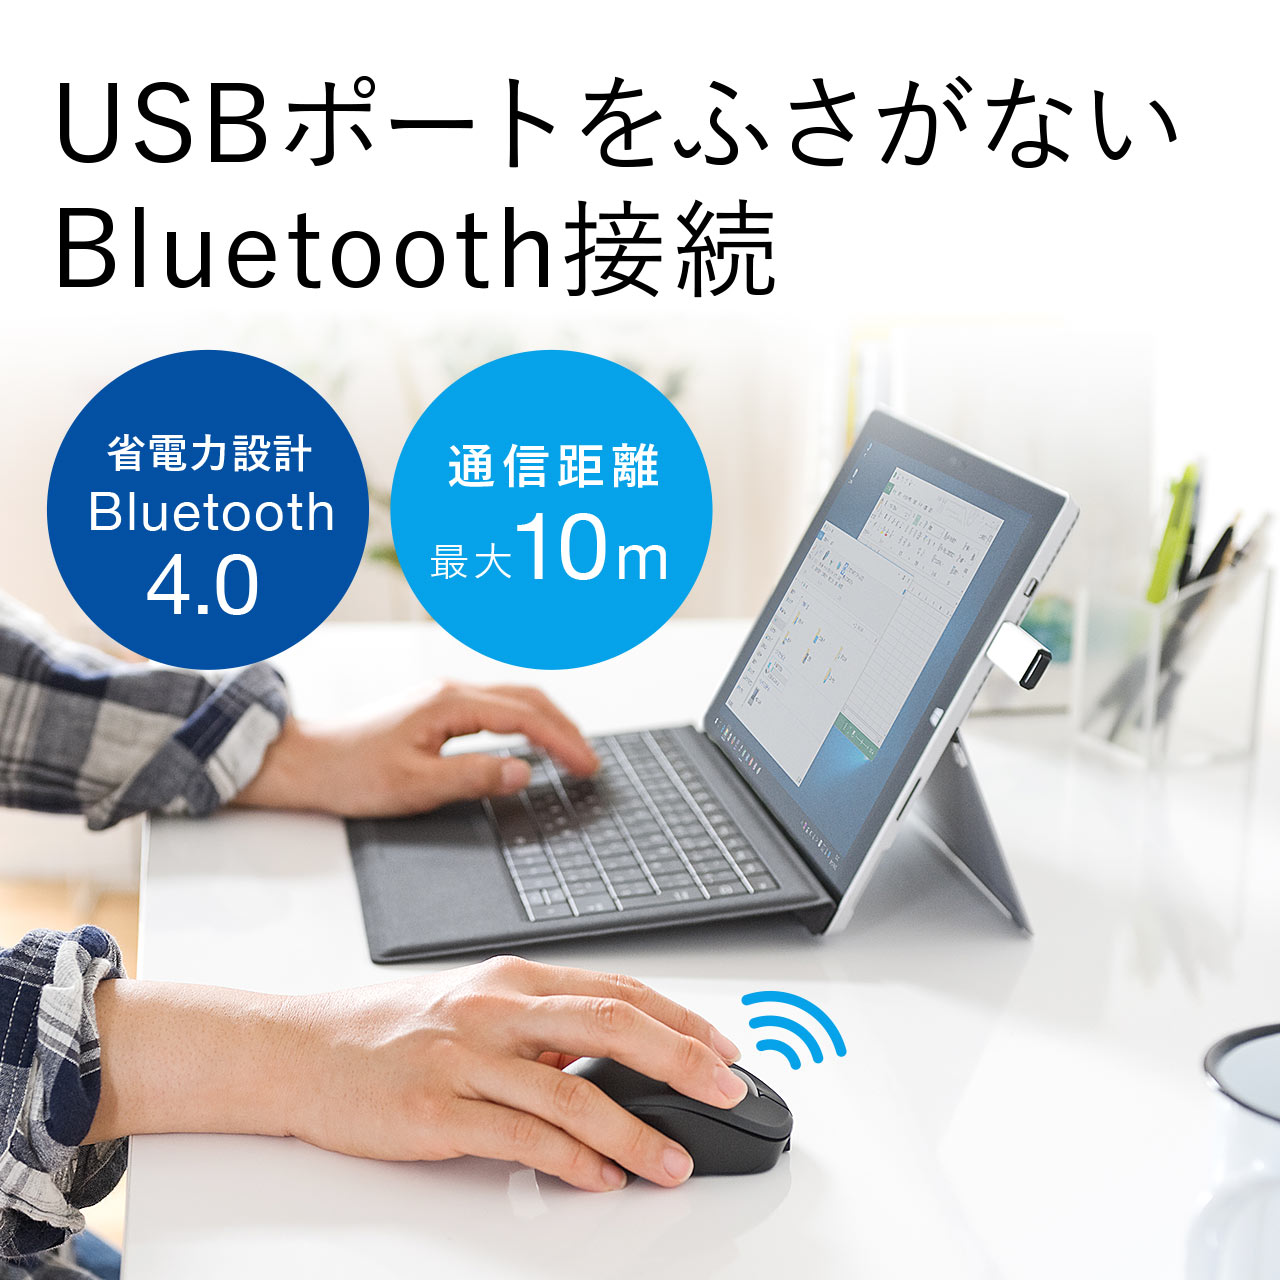 Bluetooth}EX([dEu[LEDEBluetooth4.0Ebhj 400-MA074R